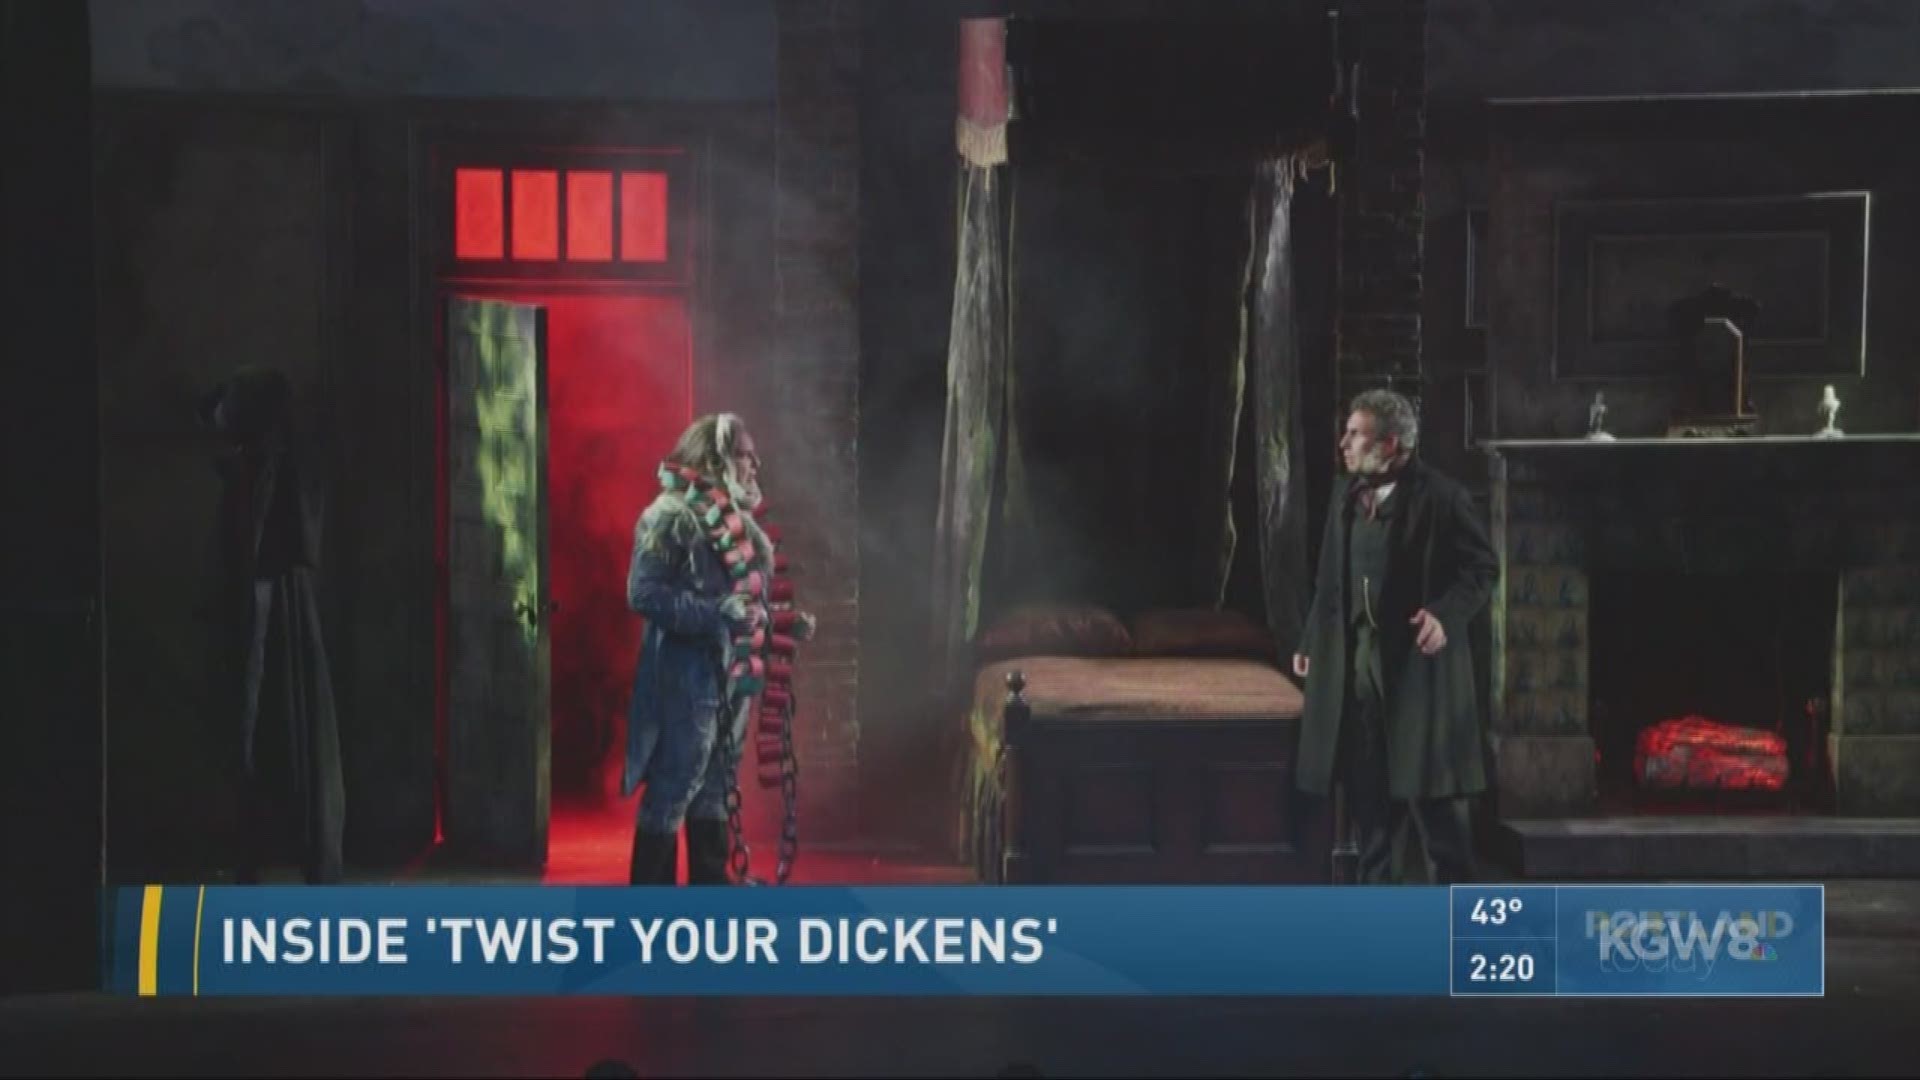 Inside "Twist your Dickens"